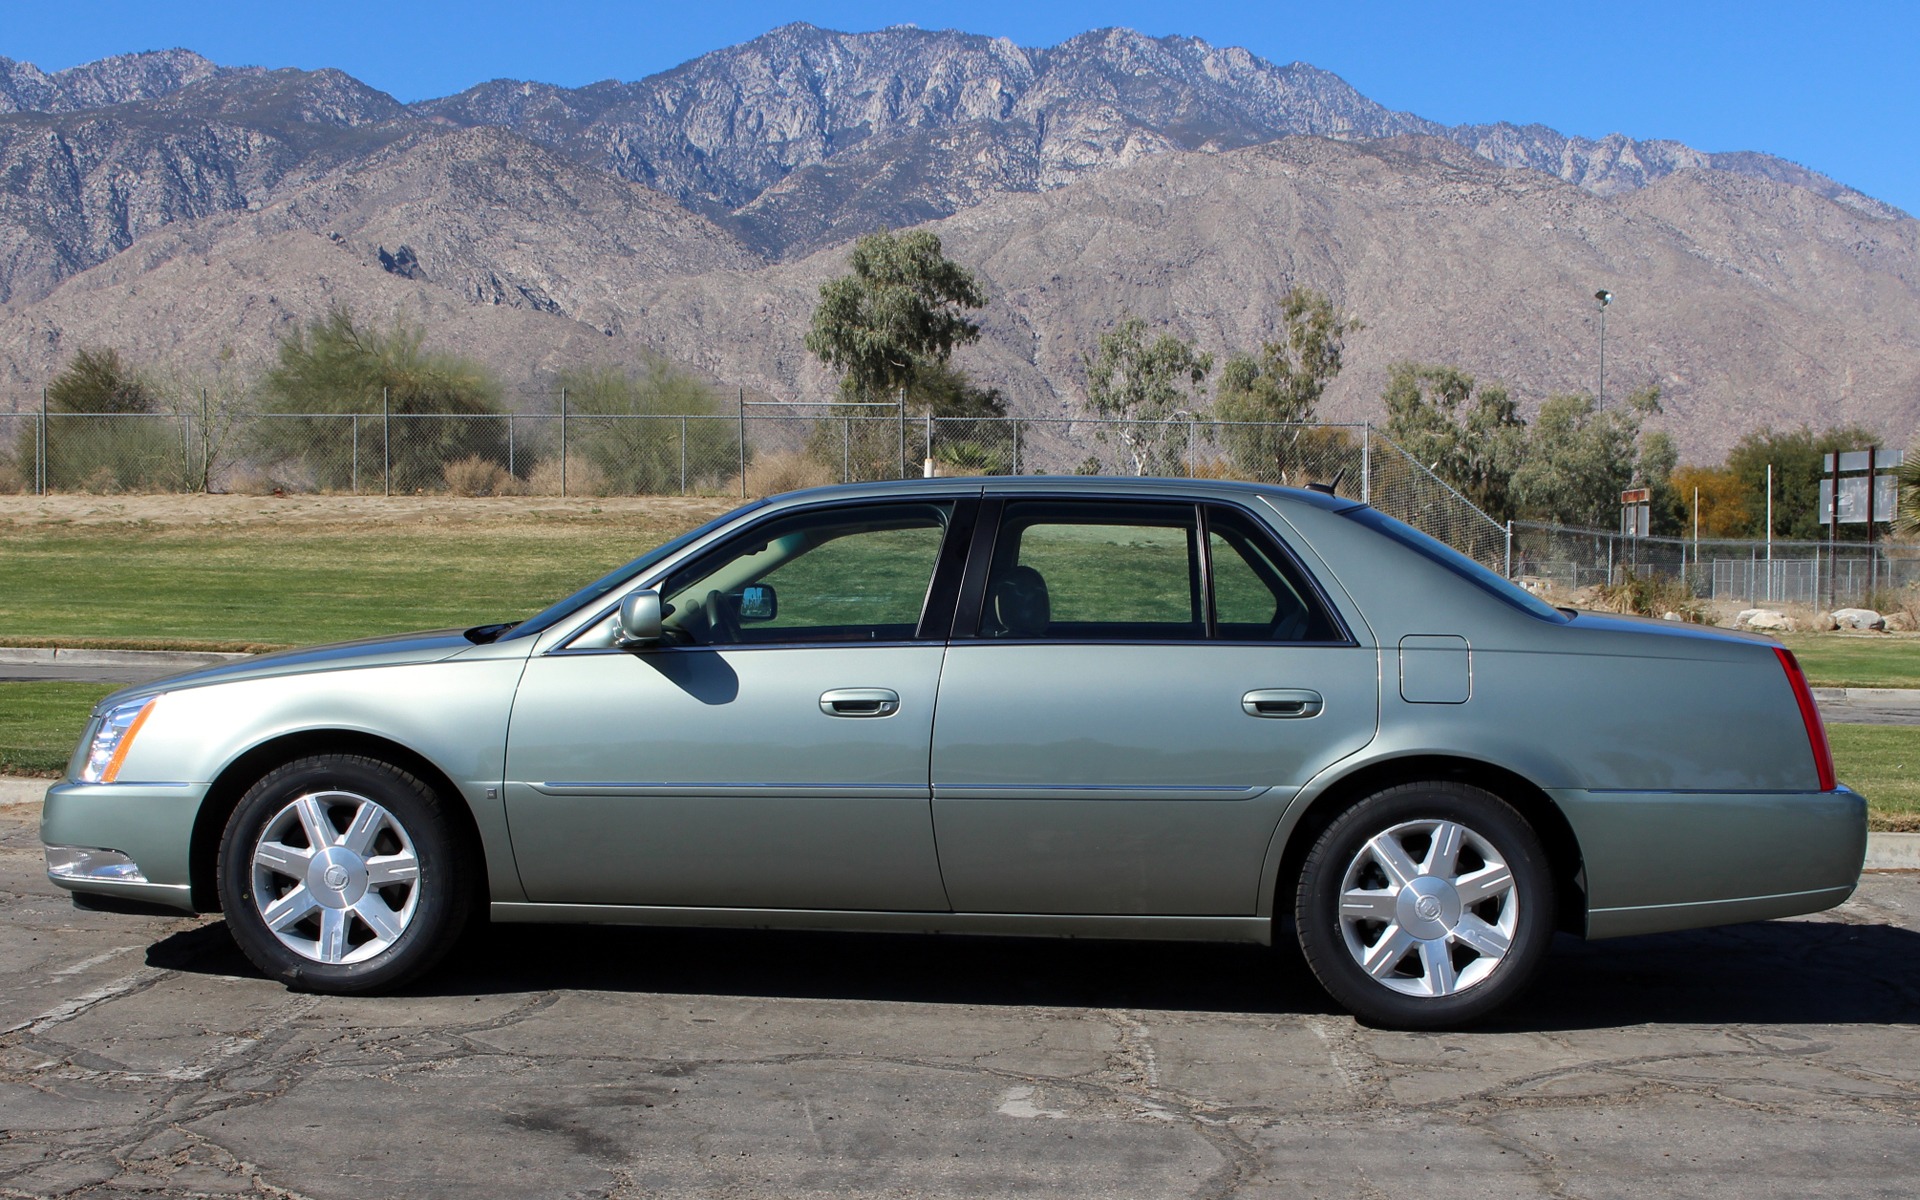 2006 Cadillac DTS Luxury I Stock # CA429 for sale near Palm Springs, CA |  CA Cadillac Dealer